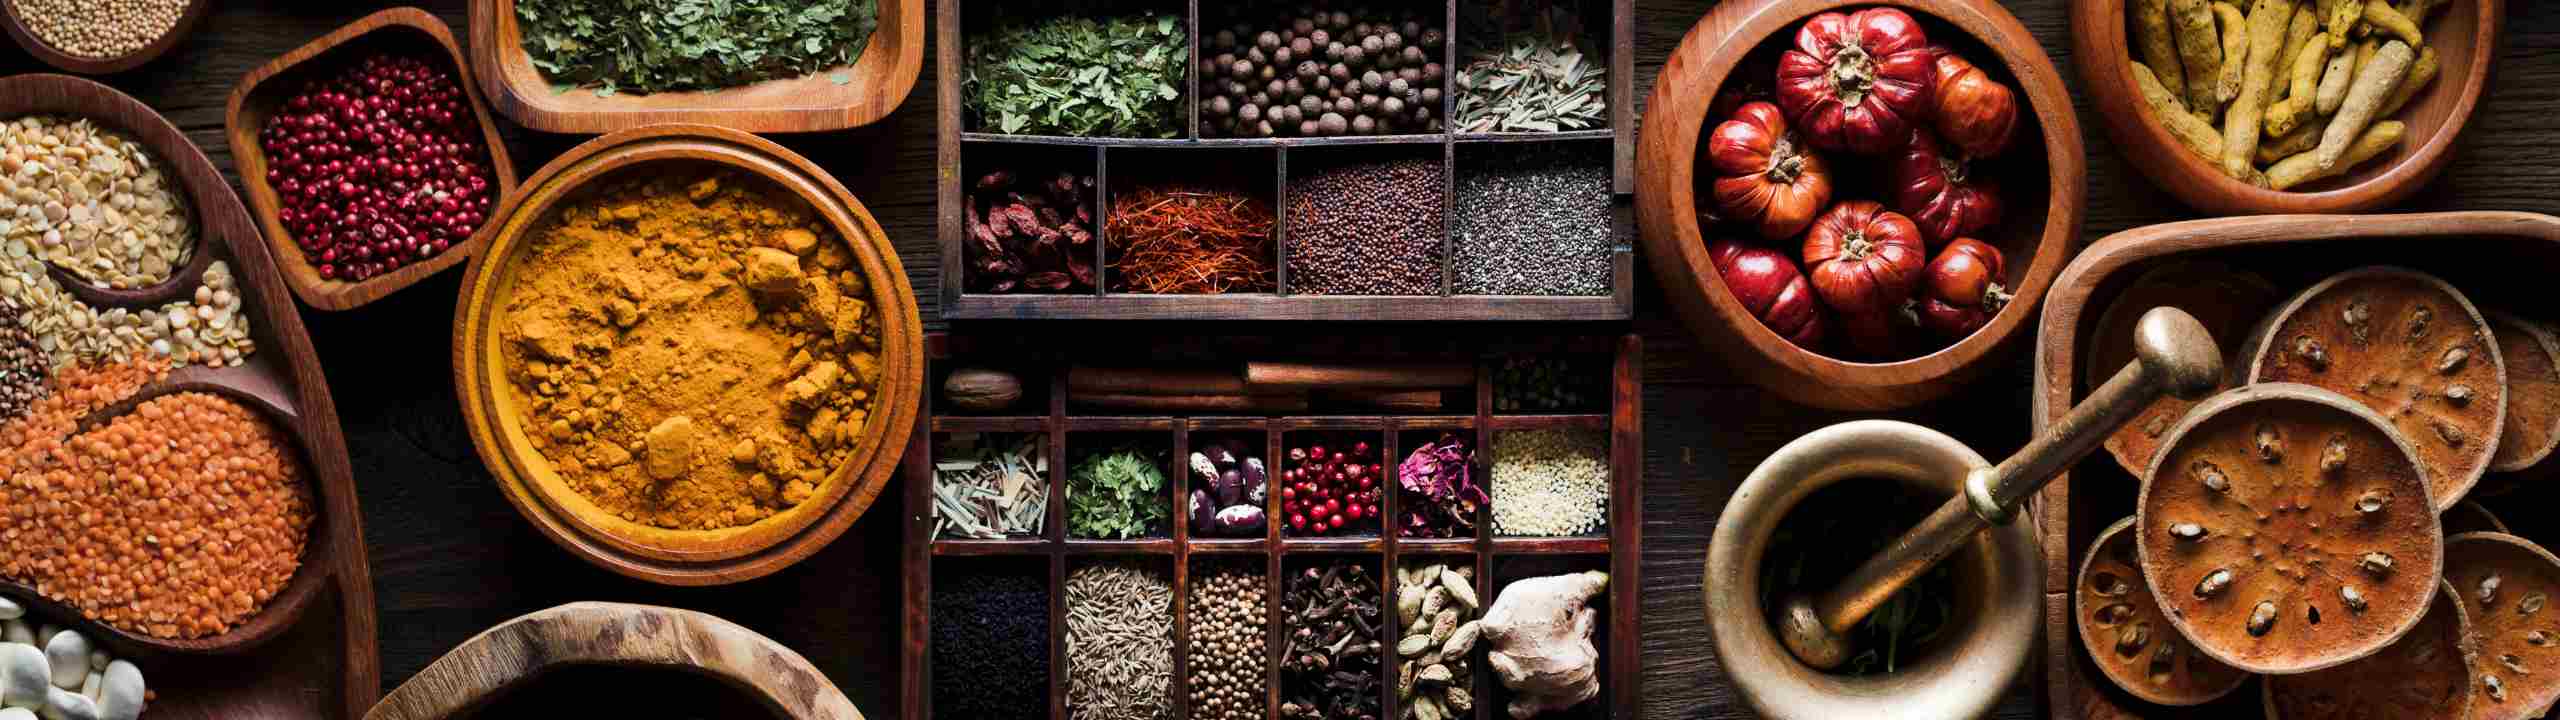 horton-spice-mills-herbs-spices